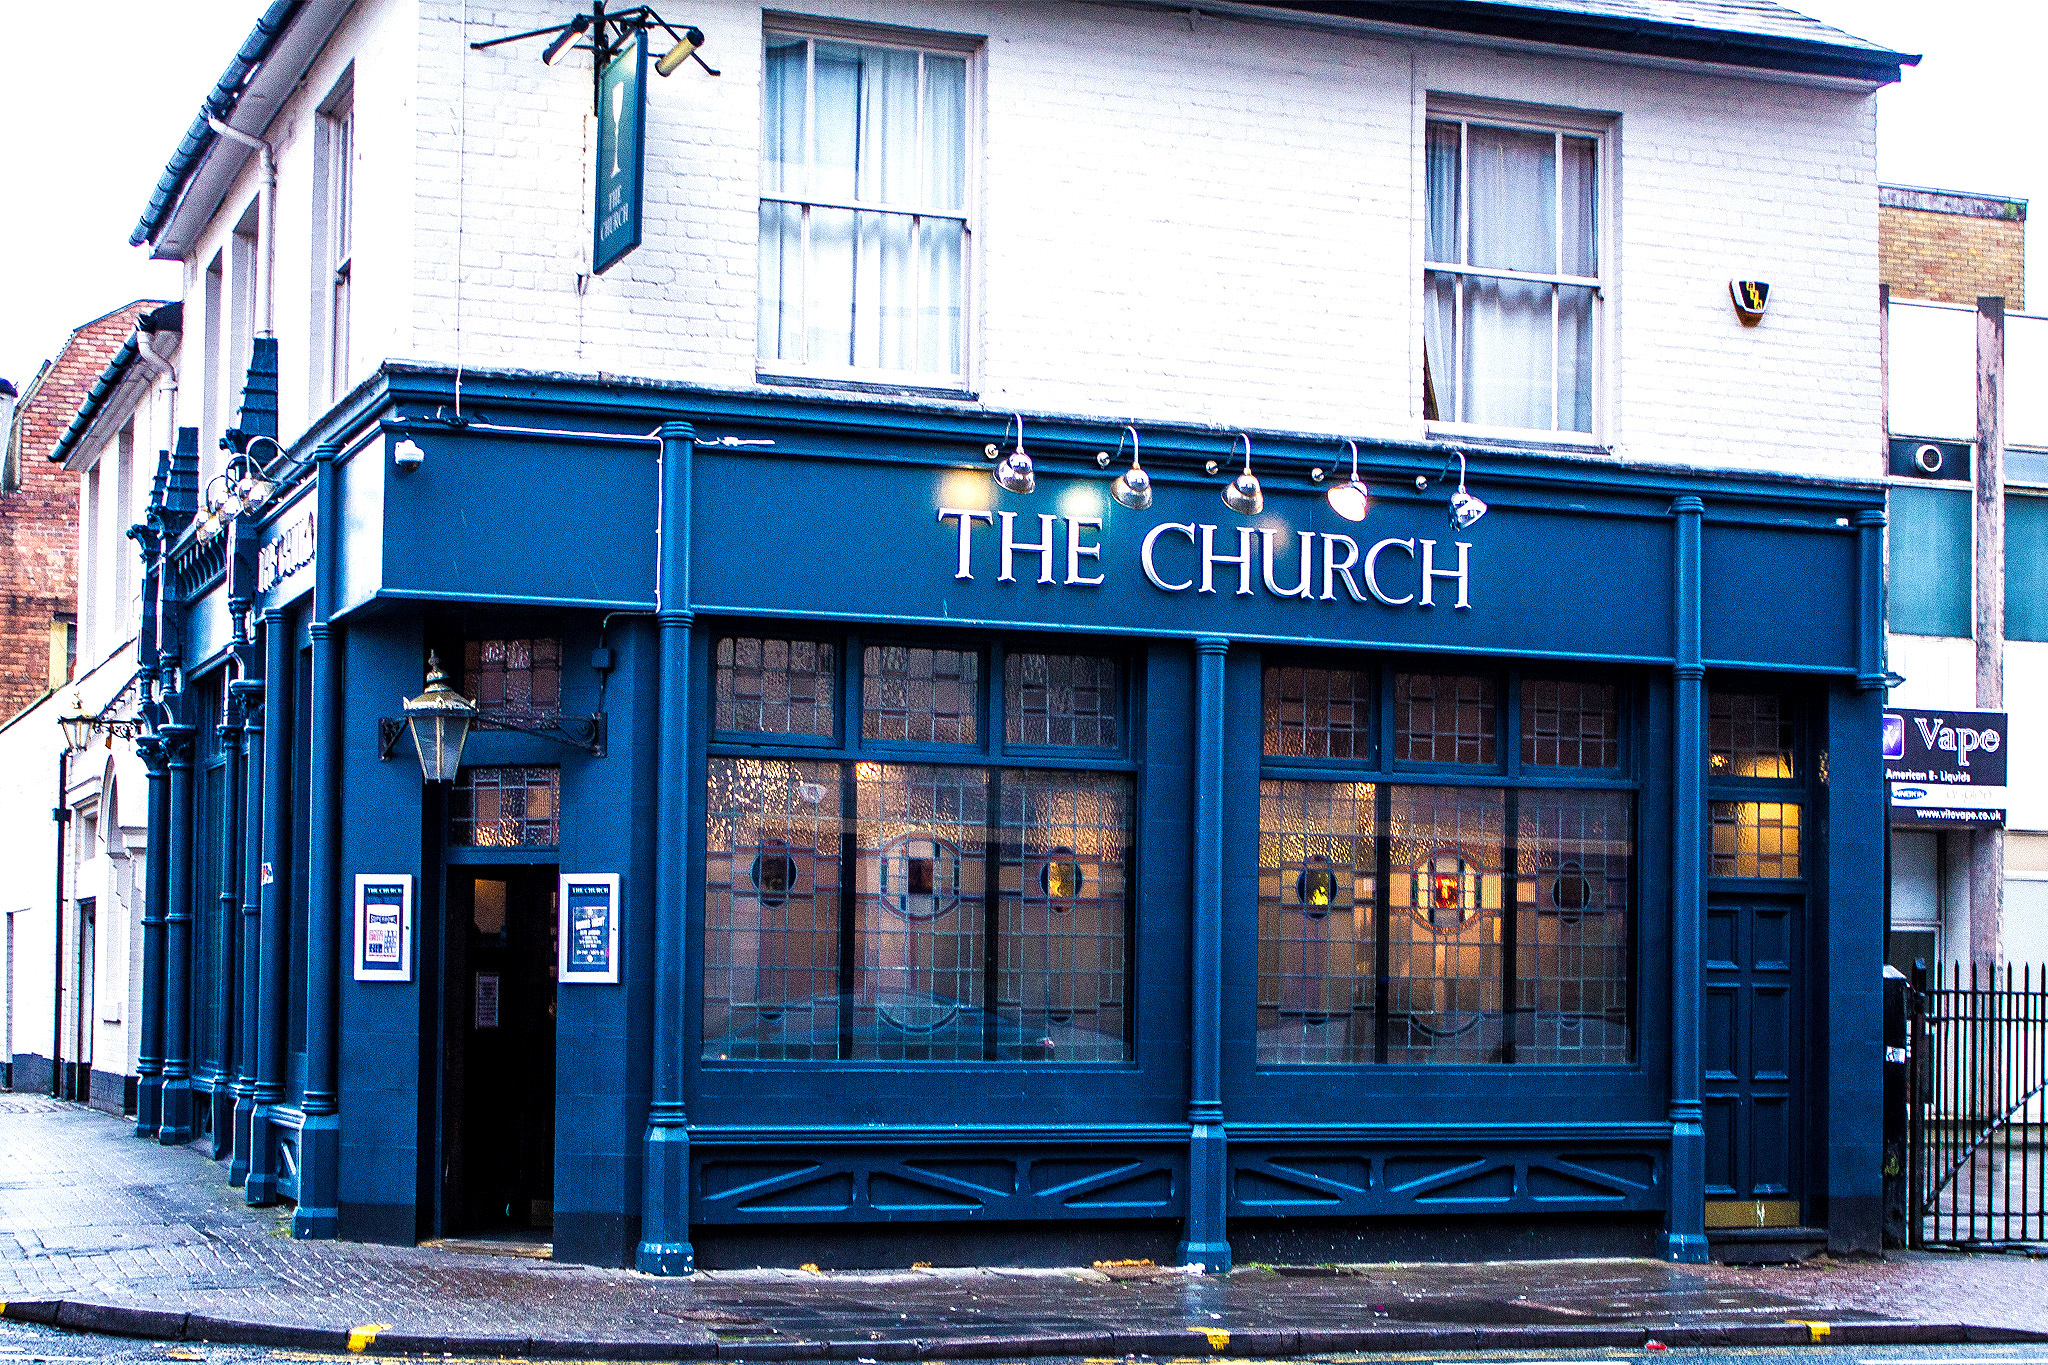 The Church – Rather Good (Birmingham)